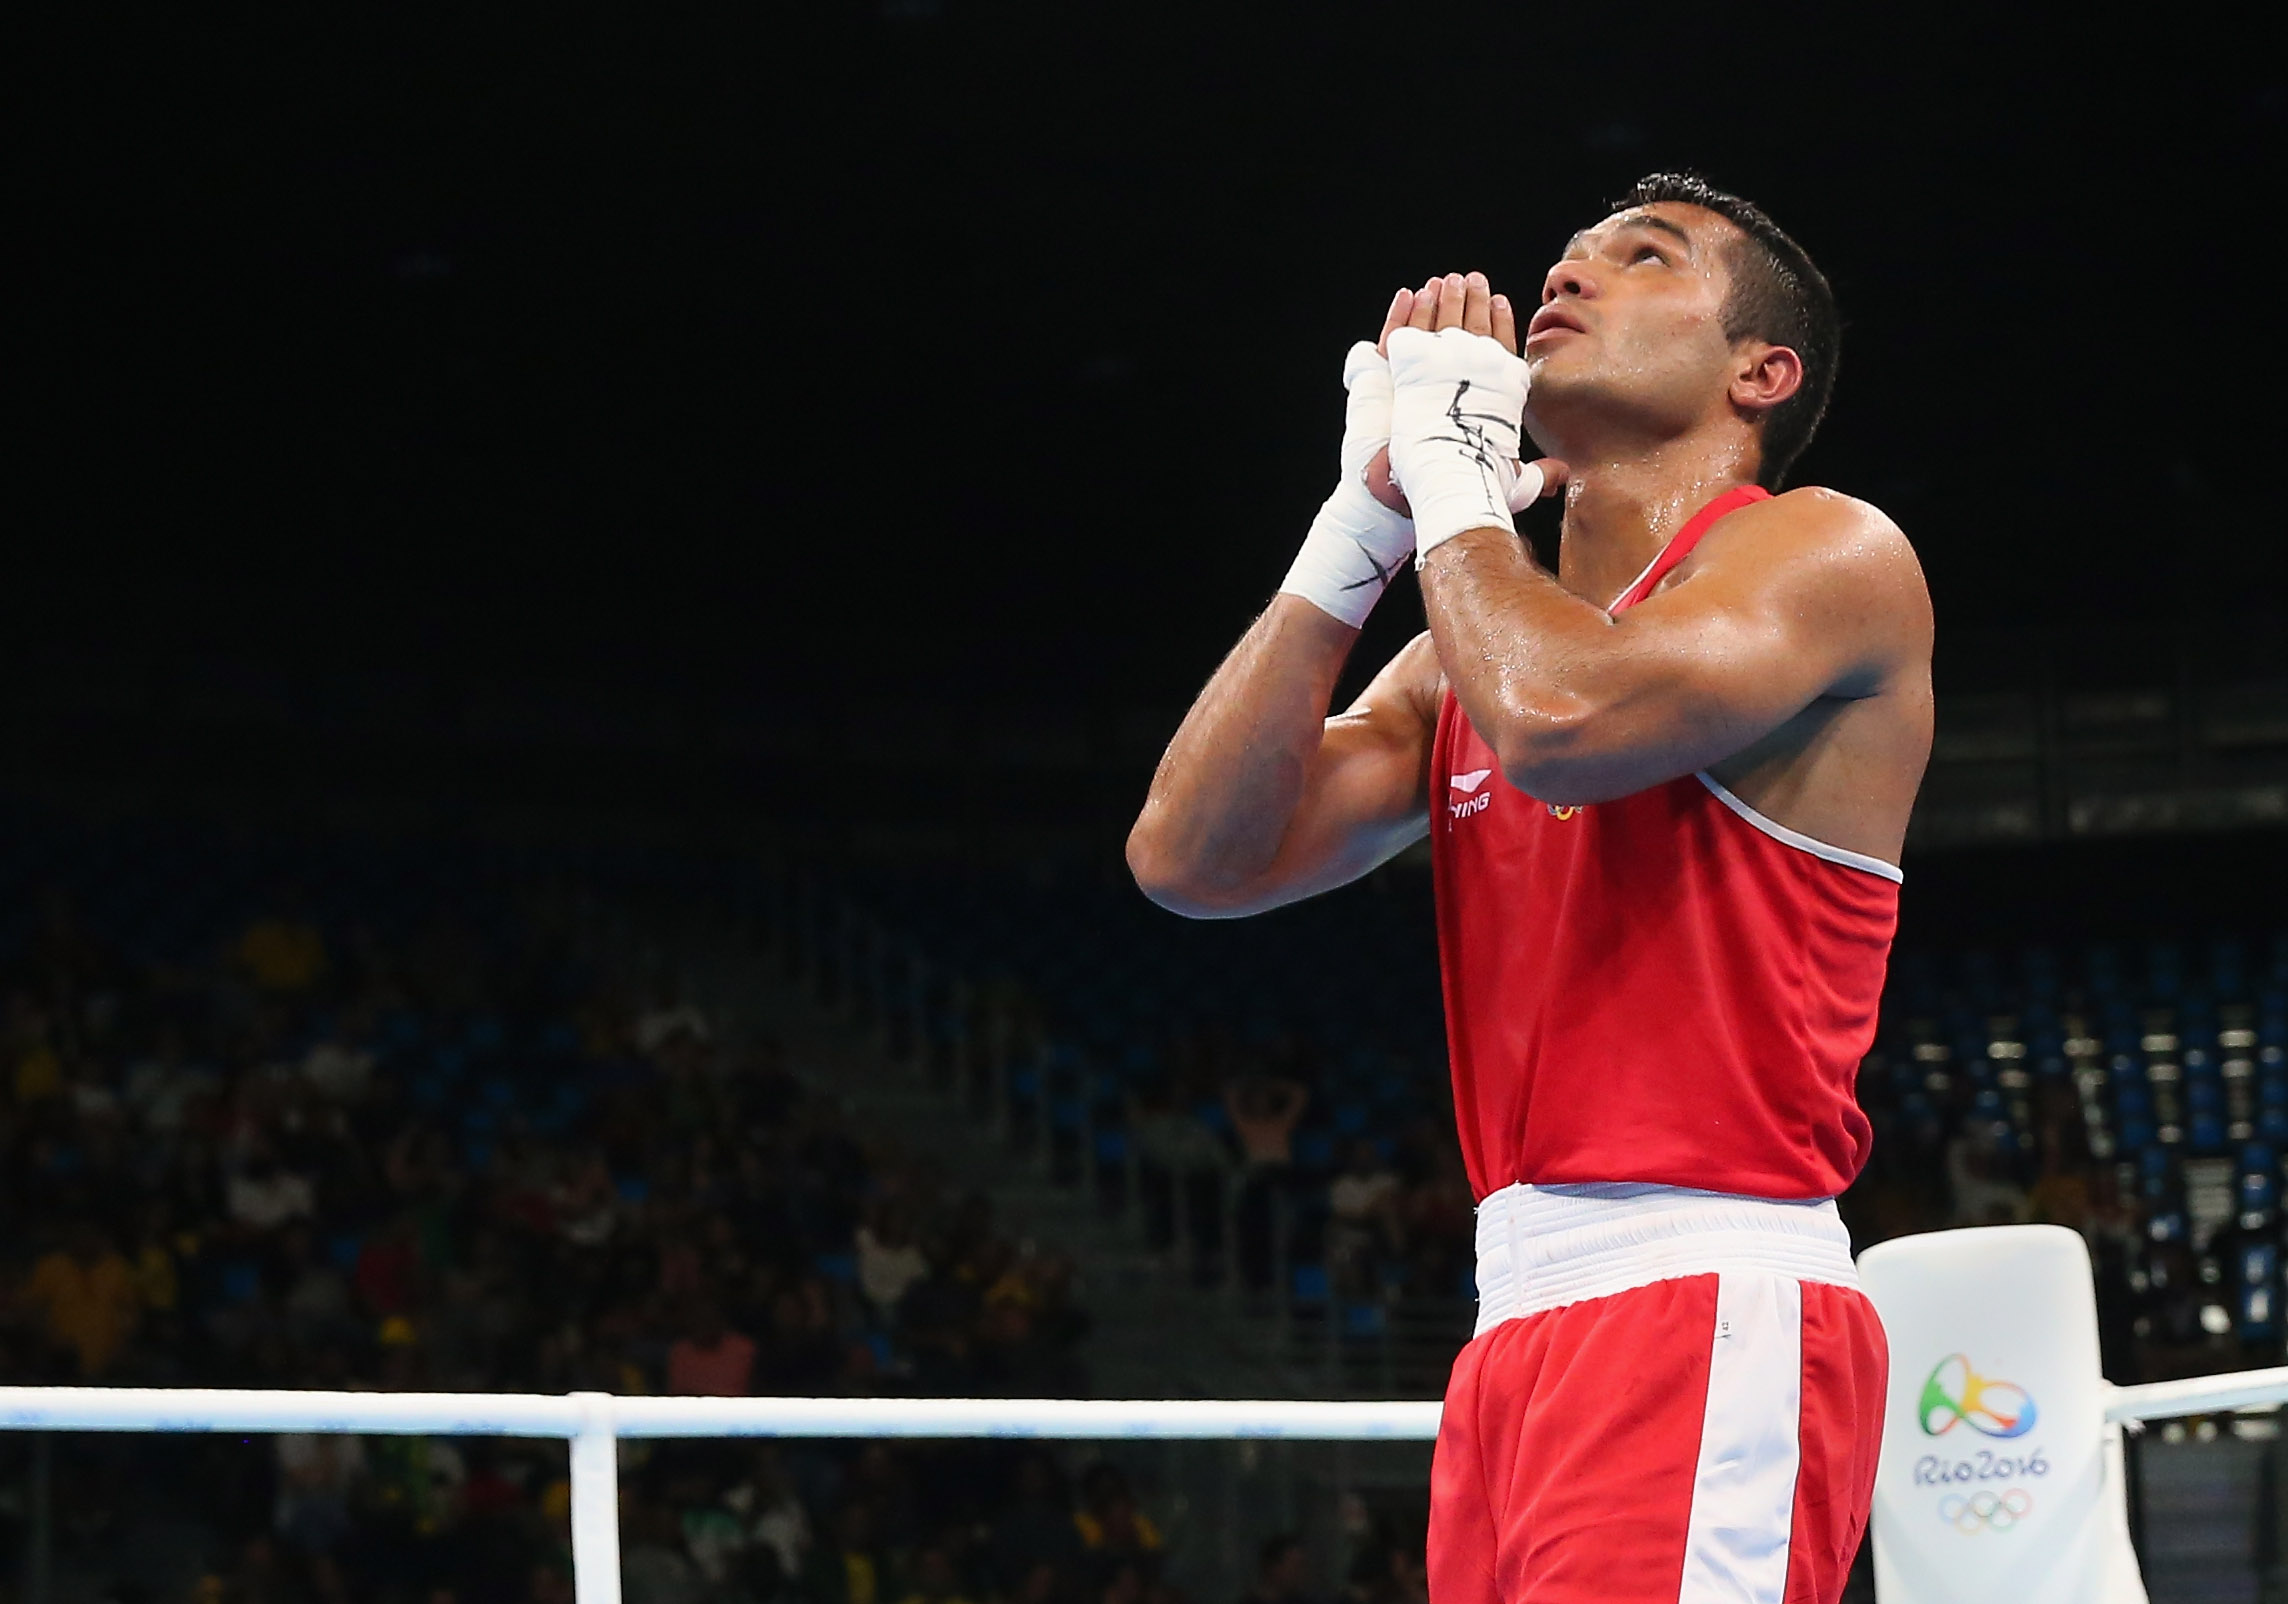 Indian boxer Vikas Krishan to make pro debut in US on January 18